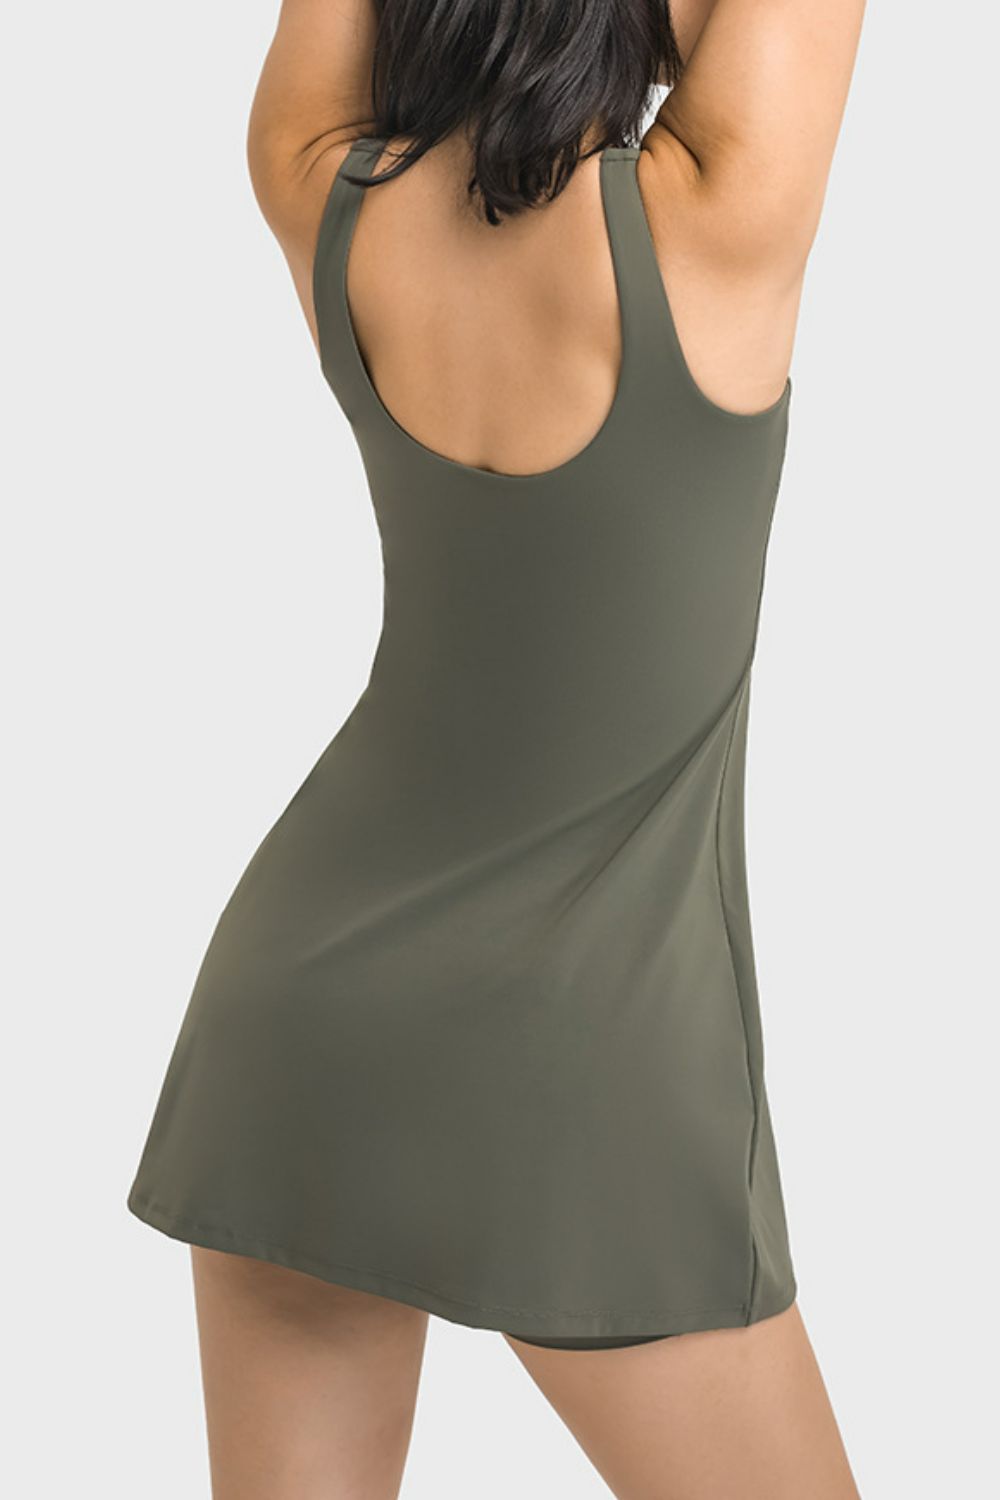 Advantage Tank Dress - Lamoille Yoga